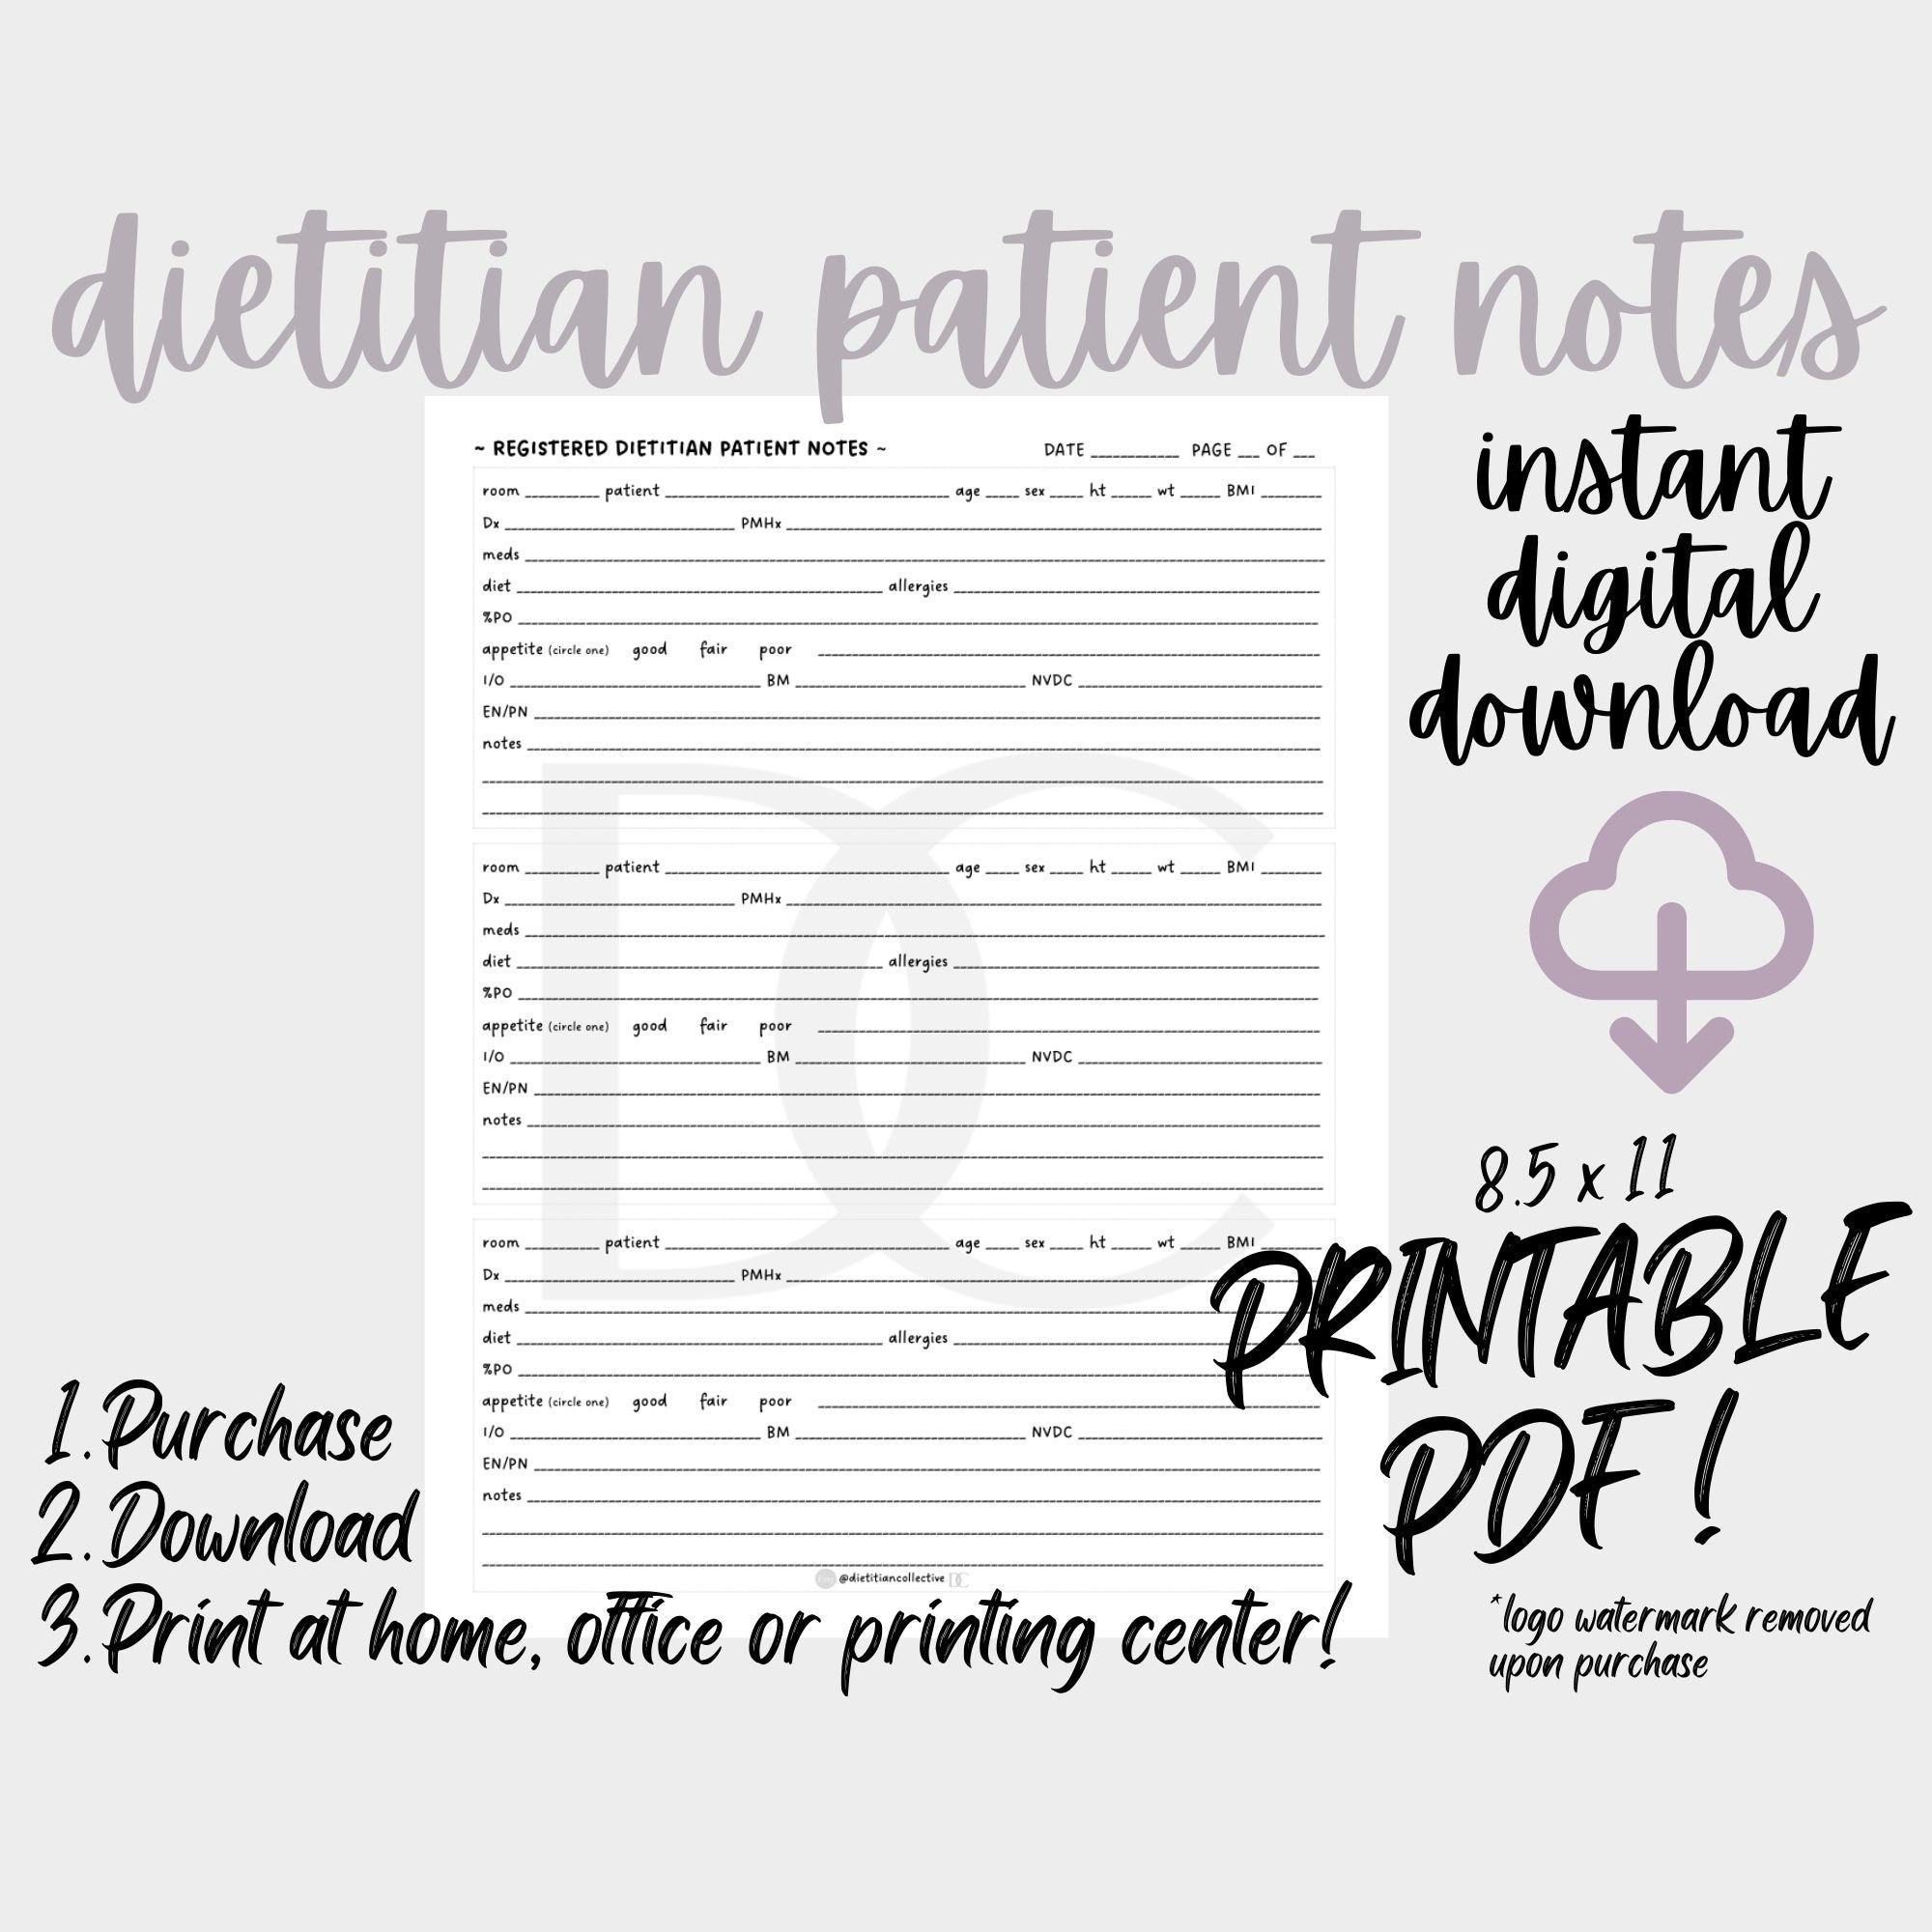 Dietitian Patient Notes Template Horizontal BandW digital image